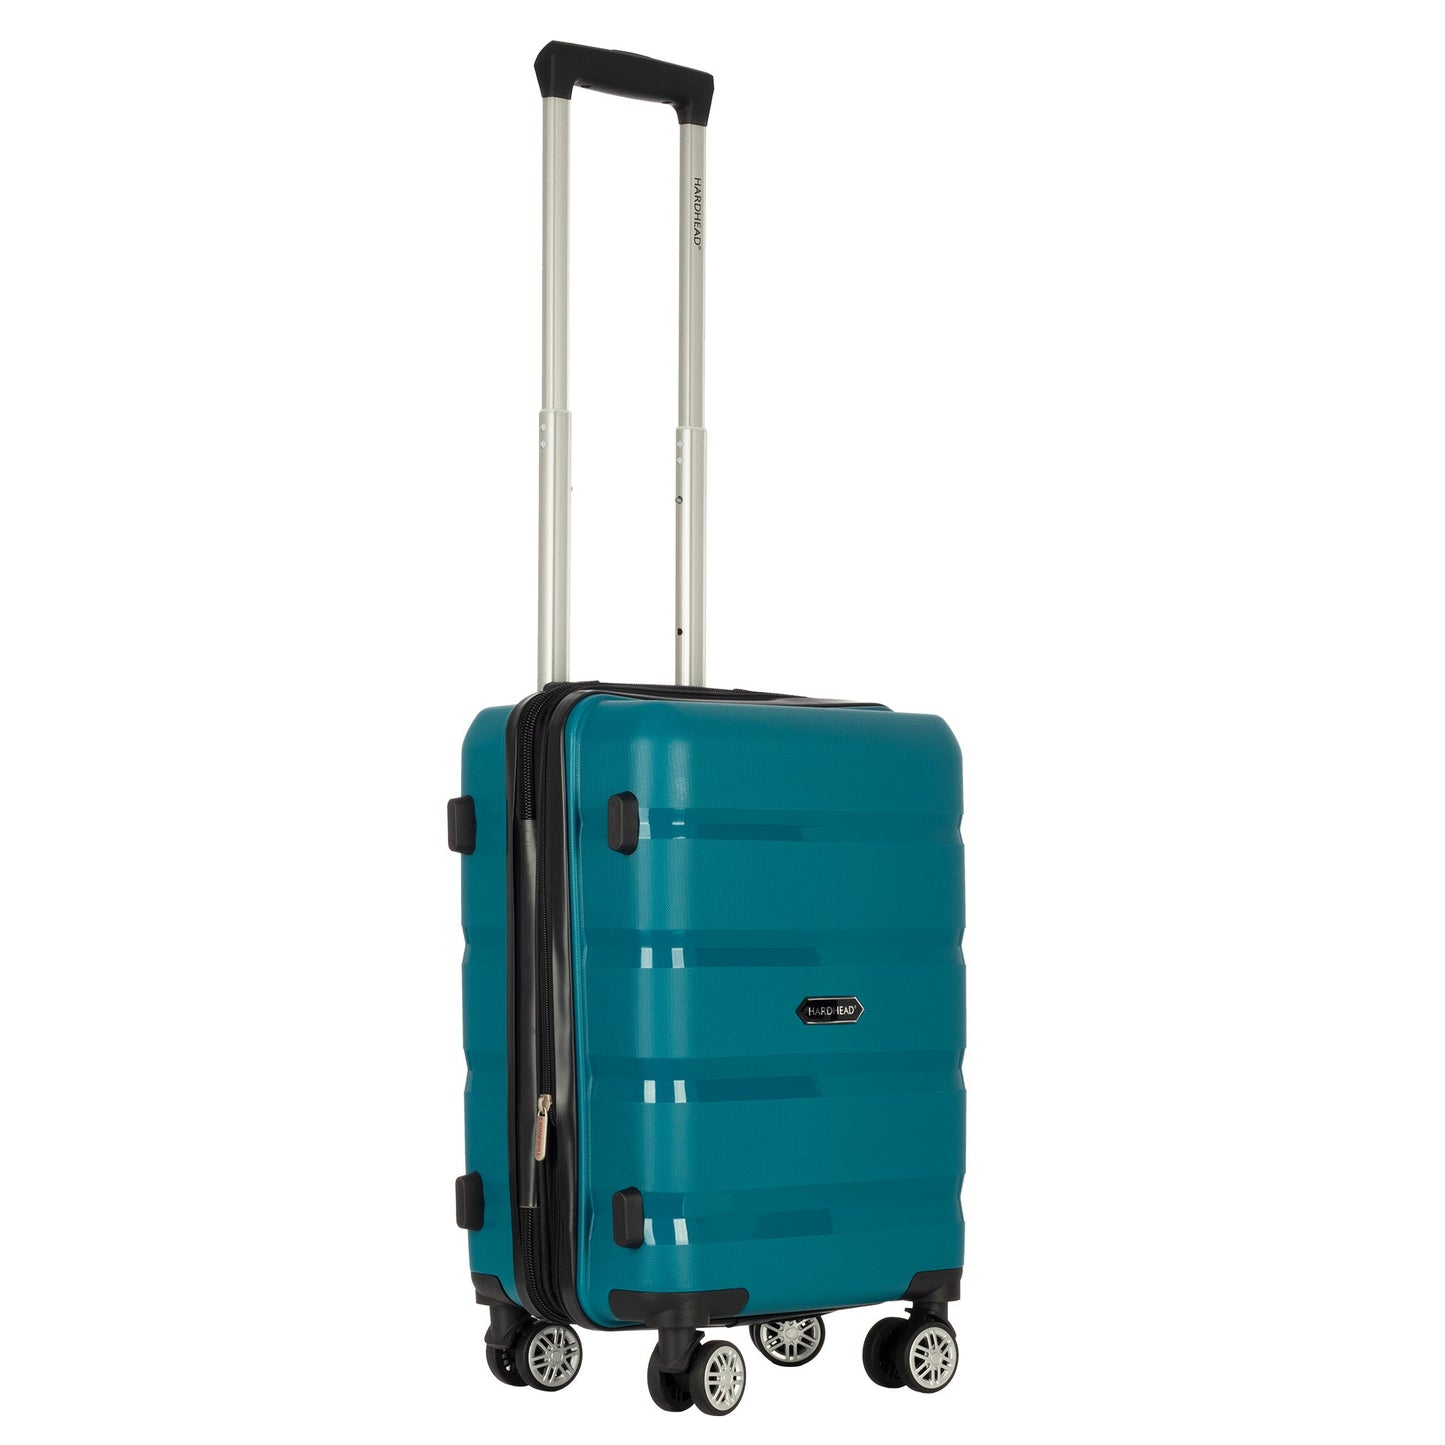 Ian collection turquoise hardhead Luggage (18") Suitcase Lock Spinner Hardshell